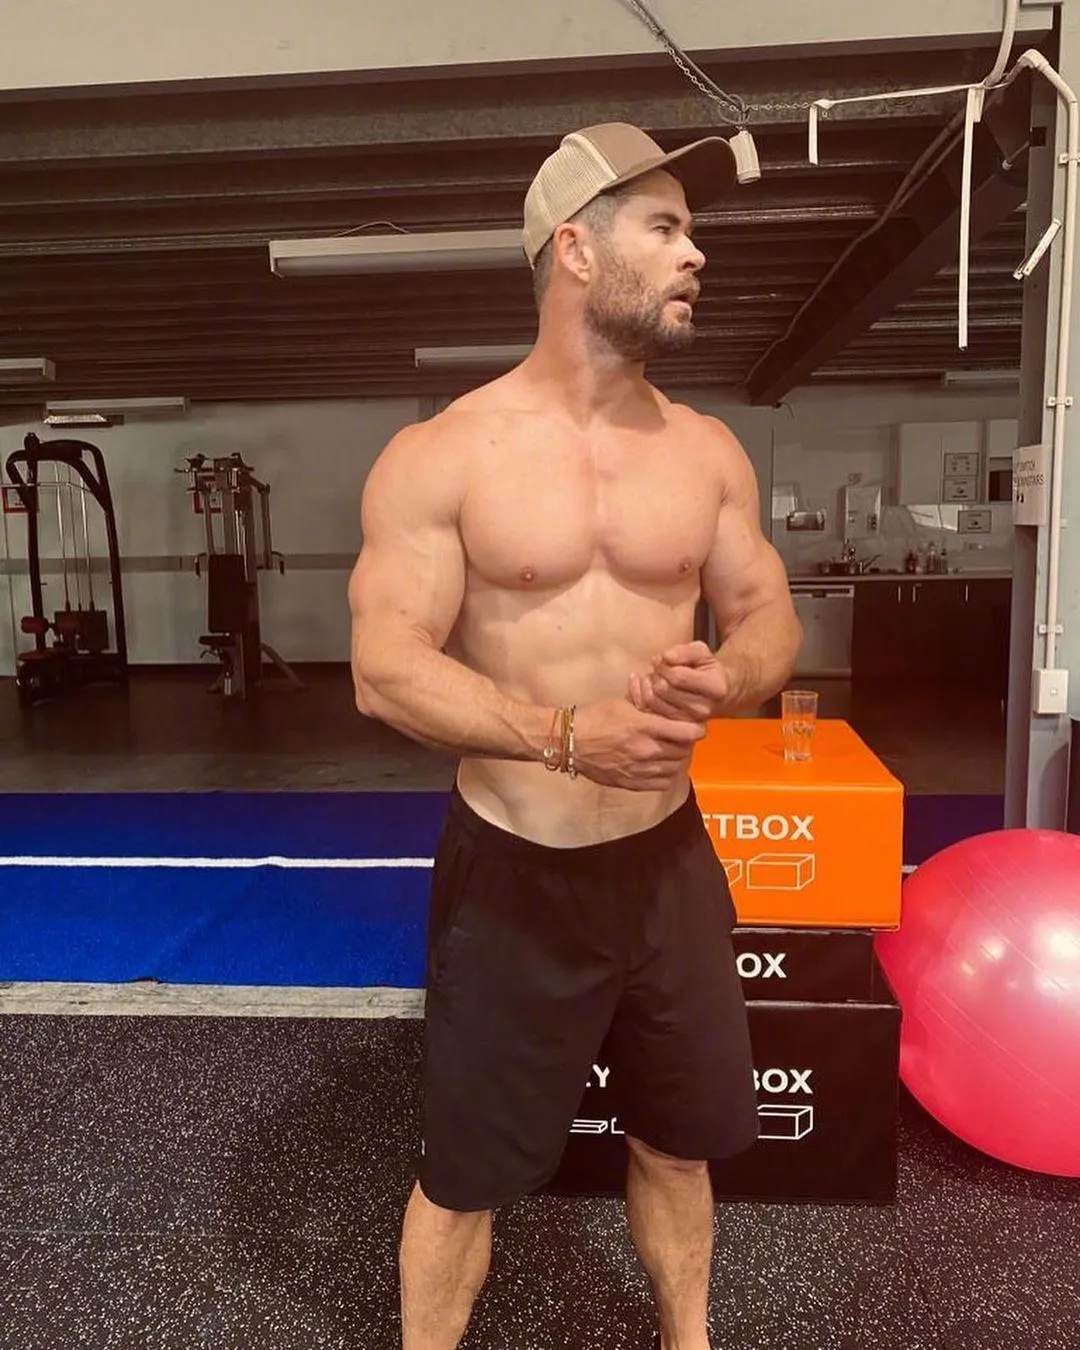 Chris Hemsworth shares fitness photos | FMV6